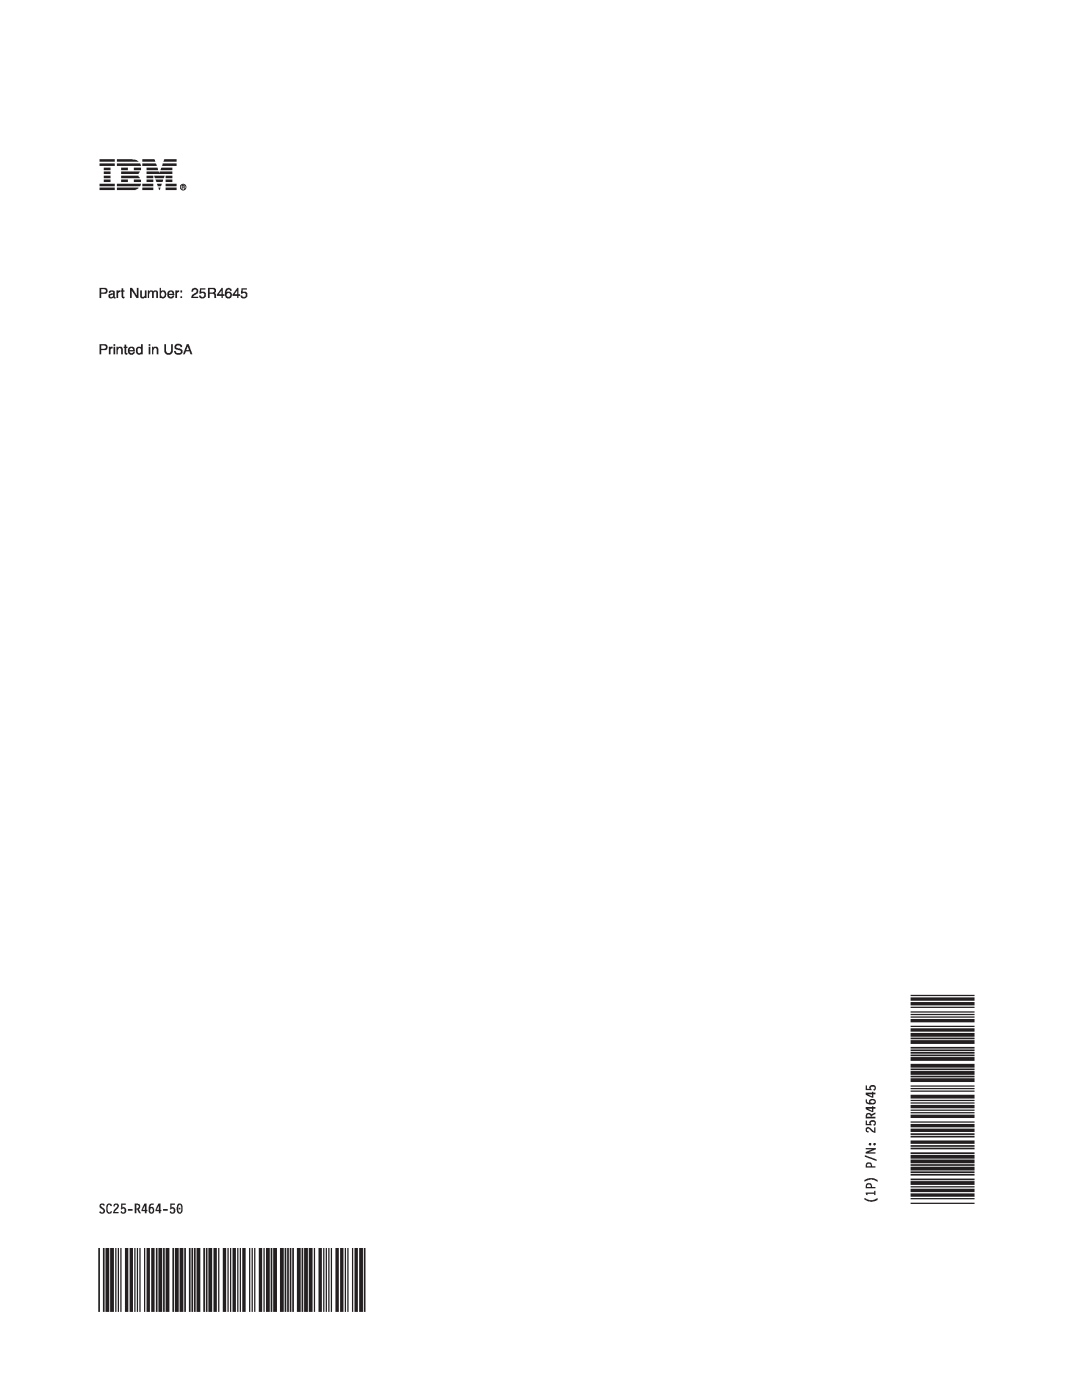 IBM xSeries 235 manual Part Number 25R4645 Printed in USA, SC25-R464-50, 1P P/N 25R4645 